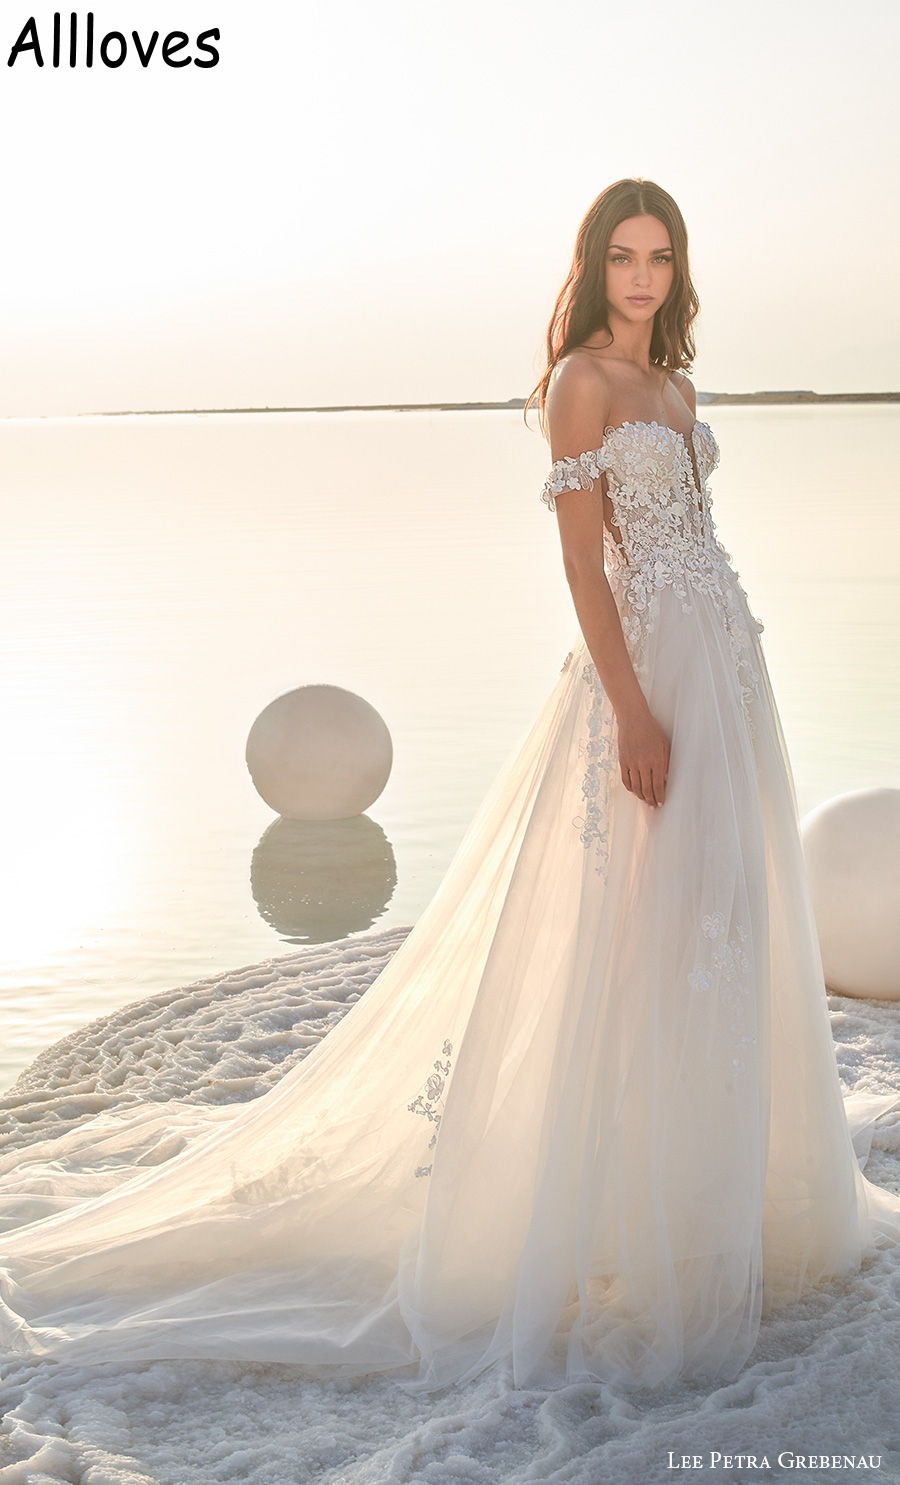 Romantic Tulle A Line Wedding Dresses Boho Beach Off Shoulder With Detachable Long Sleeves Bridal Gowns Plus Size Lace Appliqued Sweep Train Robes de Mariee CL1168